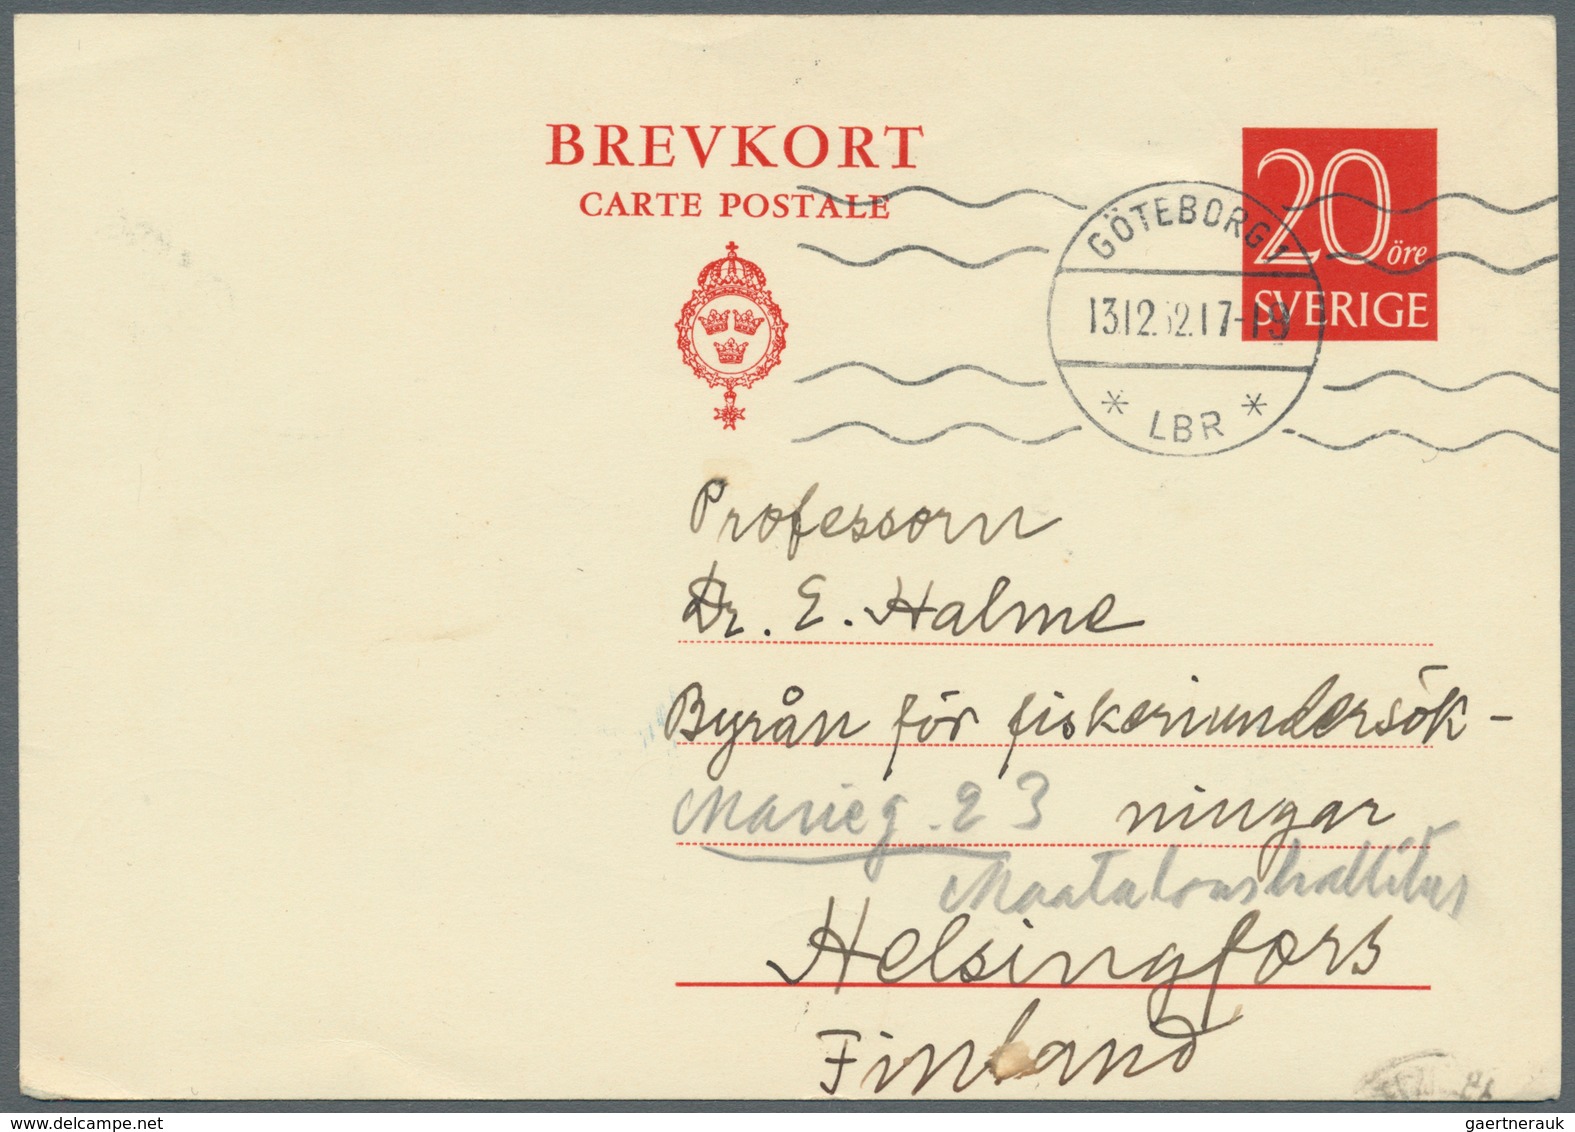 28003 Schweden - Ganzsachen: 1880/1960 (ca): 220 used postal stationery - e.g. post cards (a few with addi